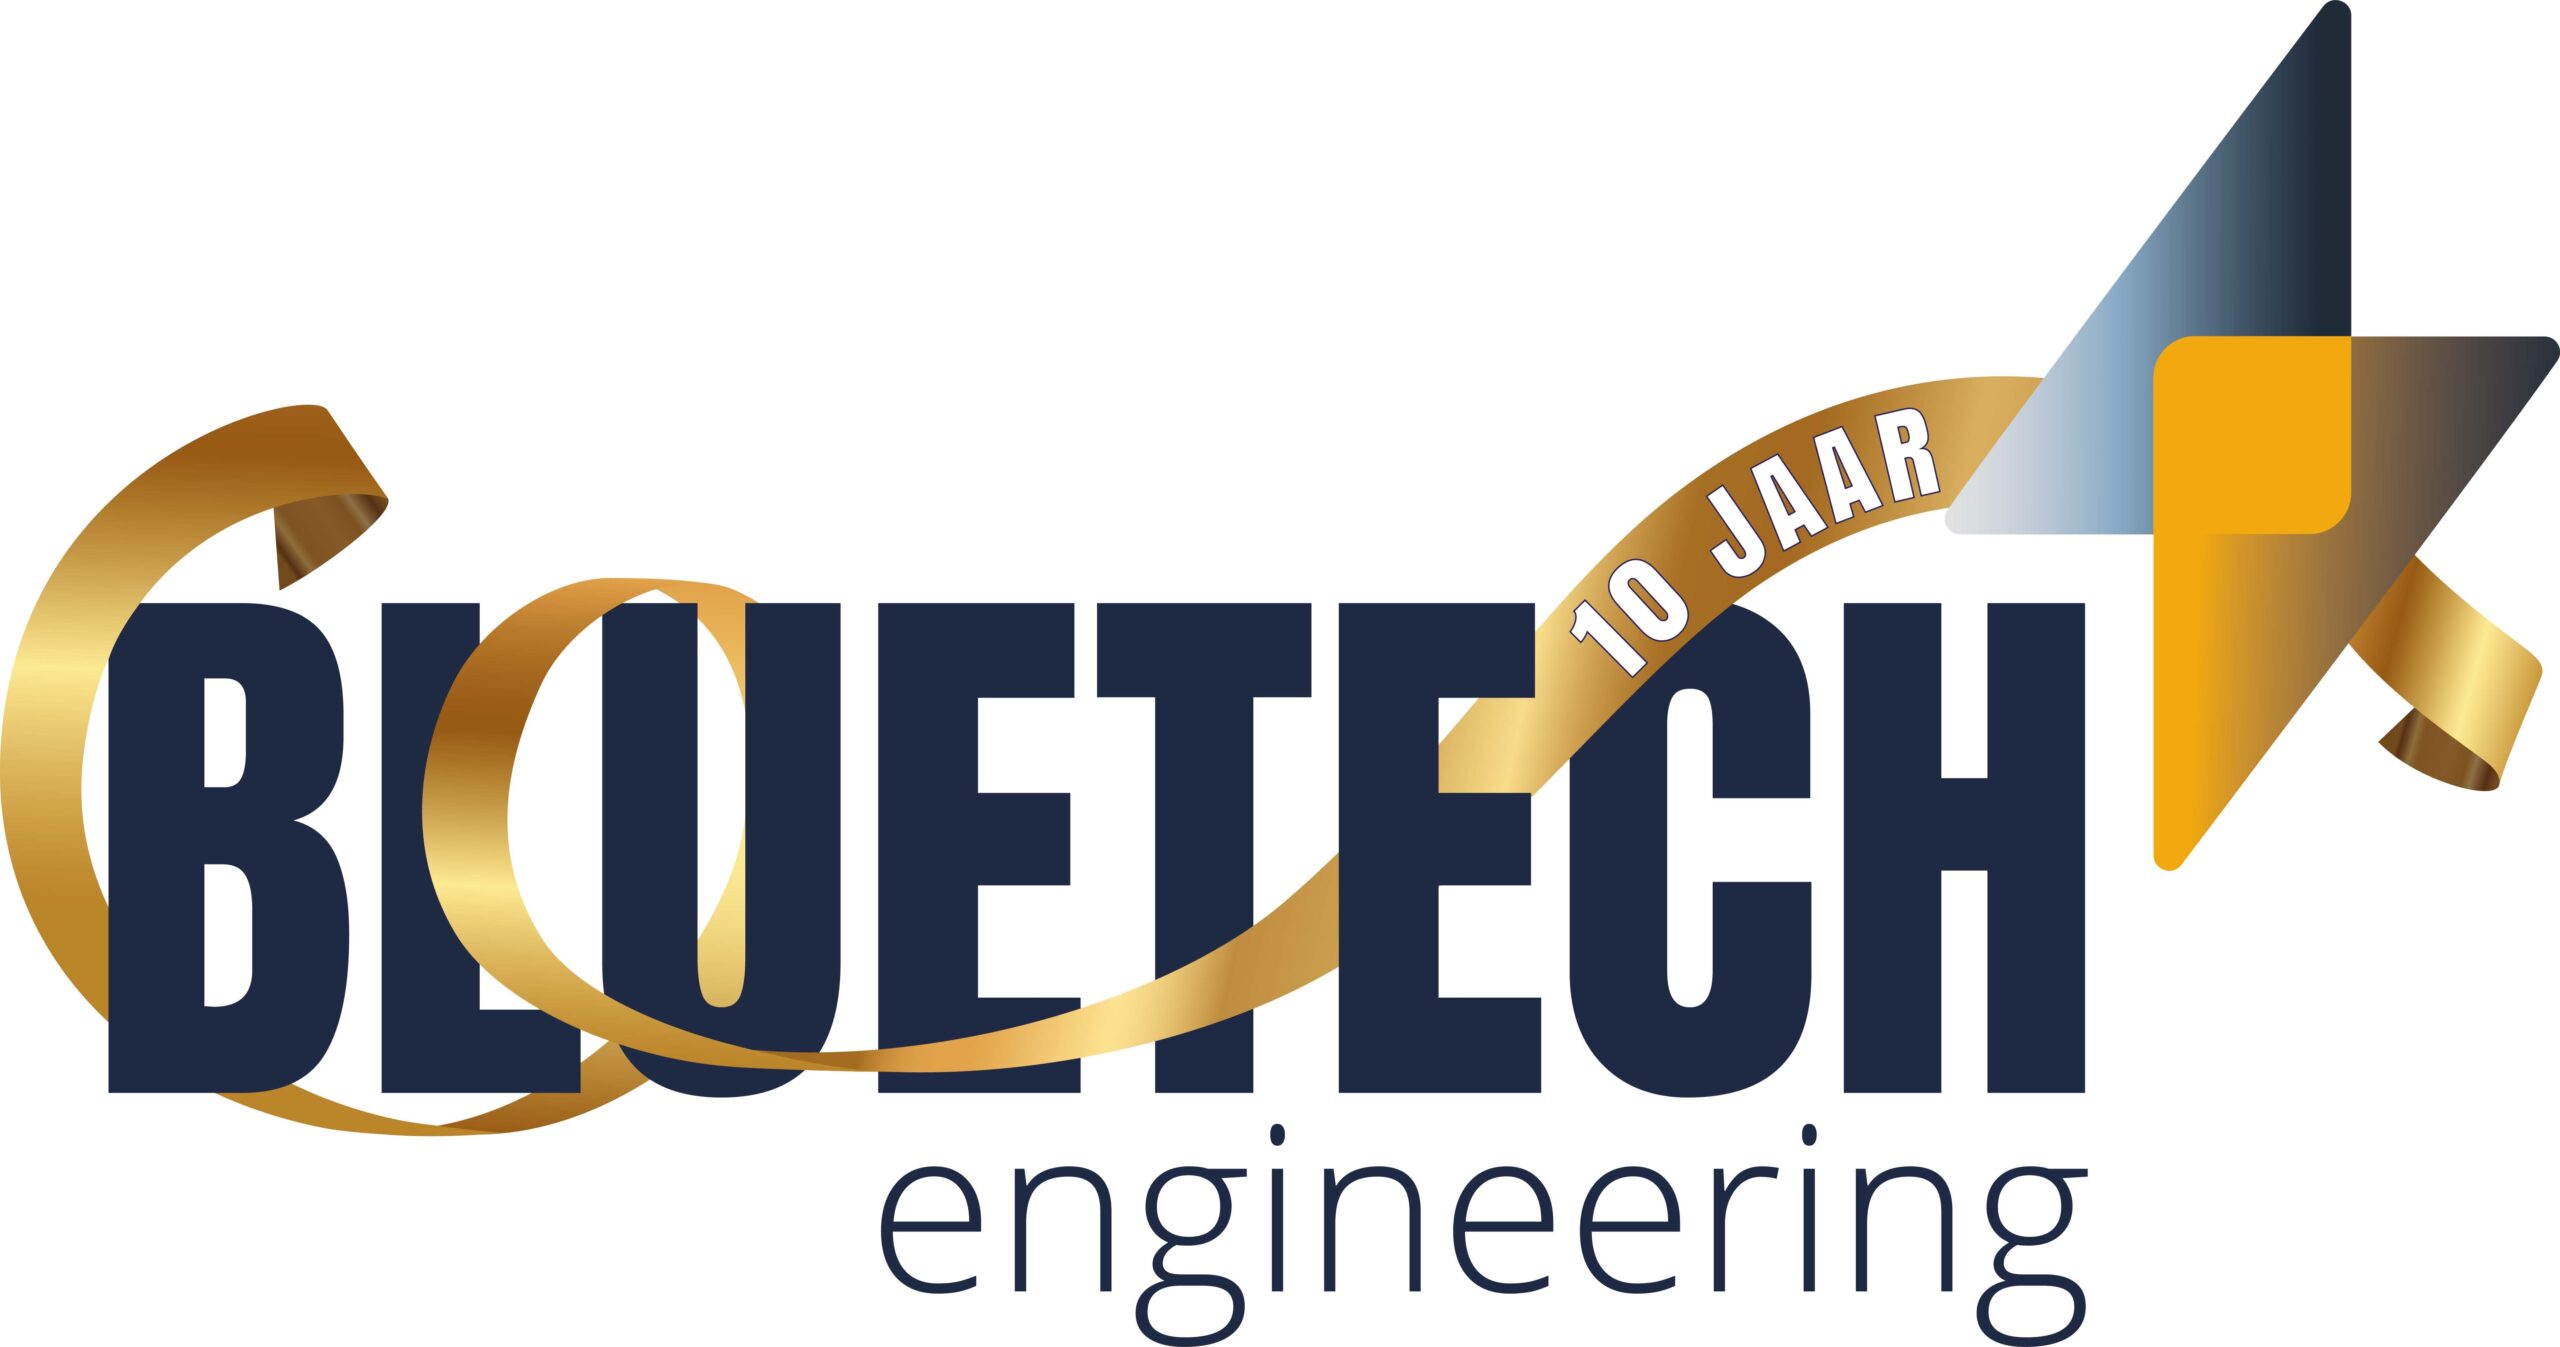 Bluetech Engineering, 10 jaar